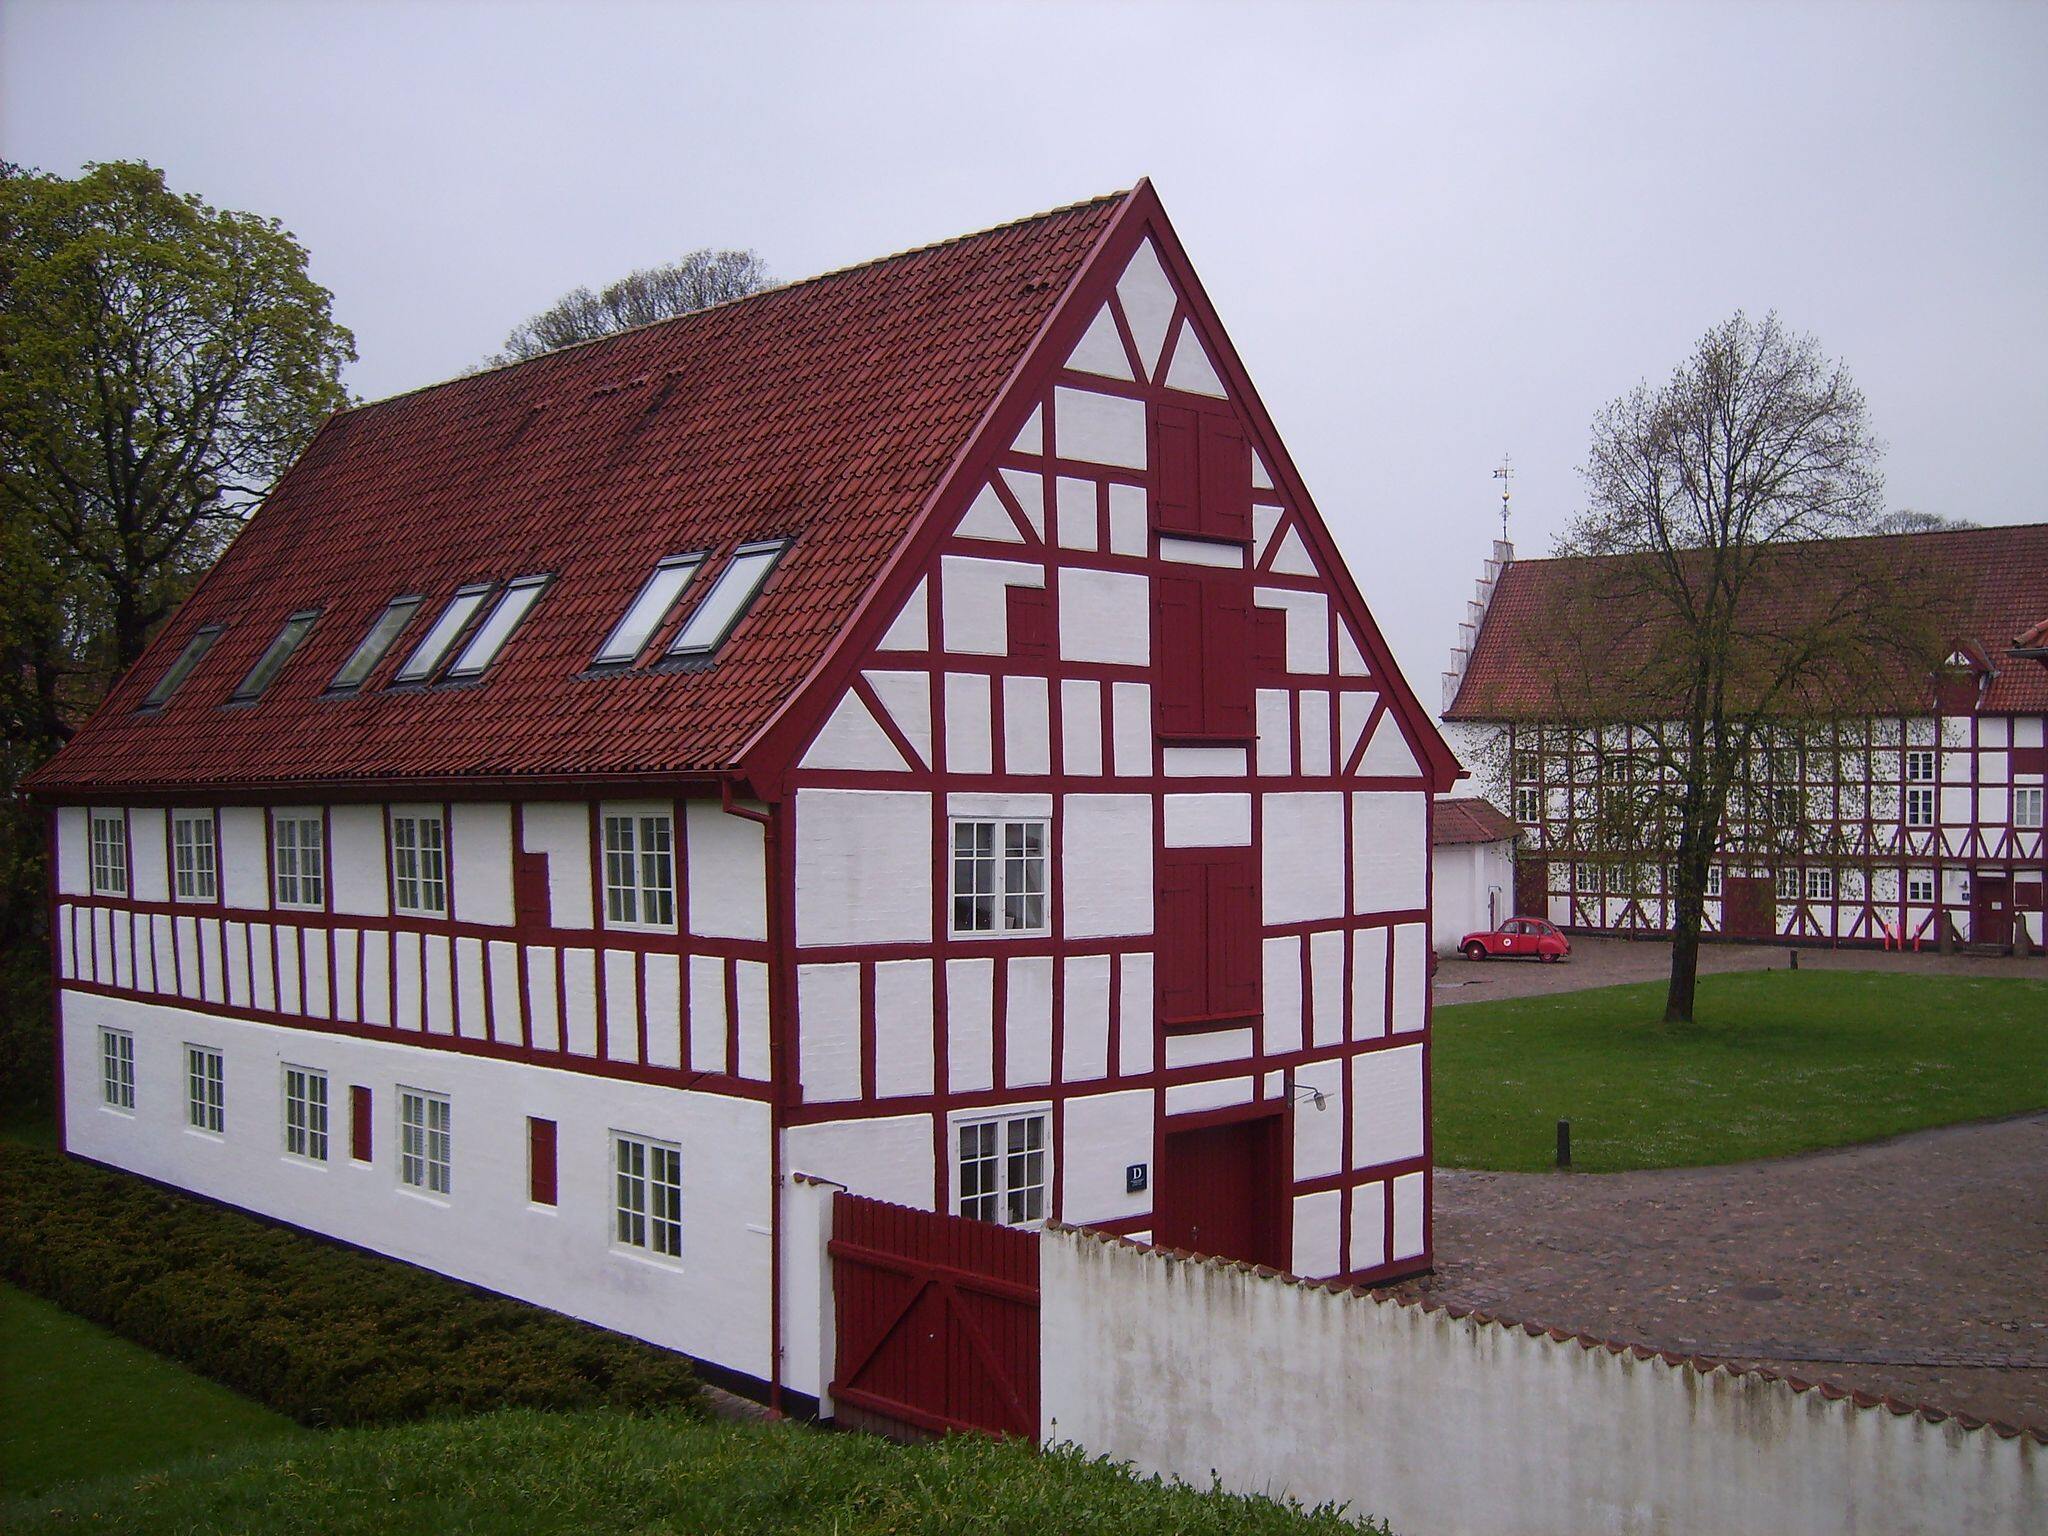 The castle Aalborghus or Aalborghus Slot in Aalborg, Denmark is built 1539-1555.